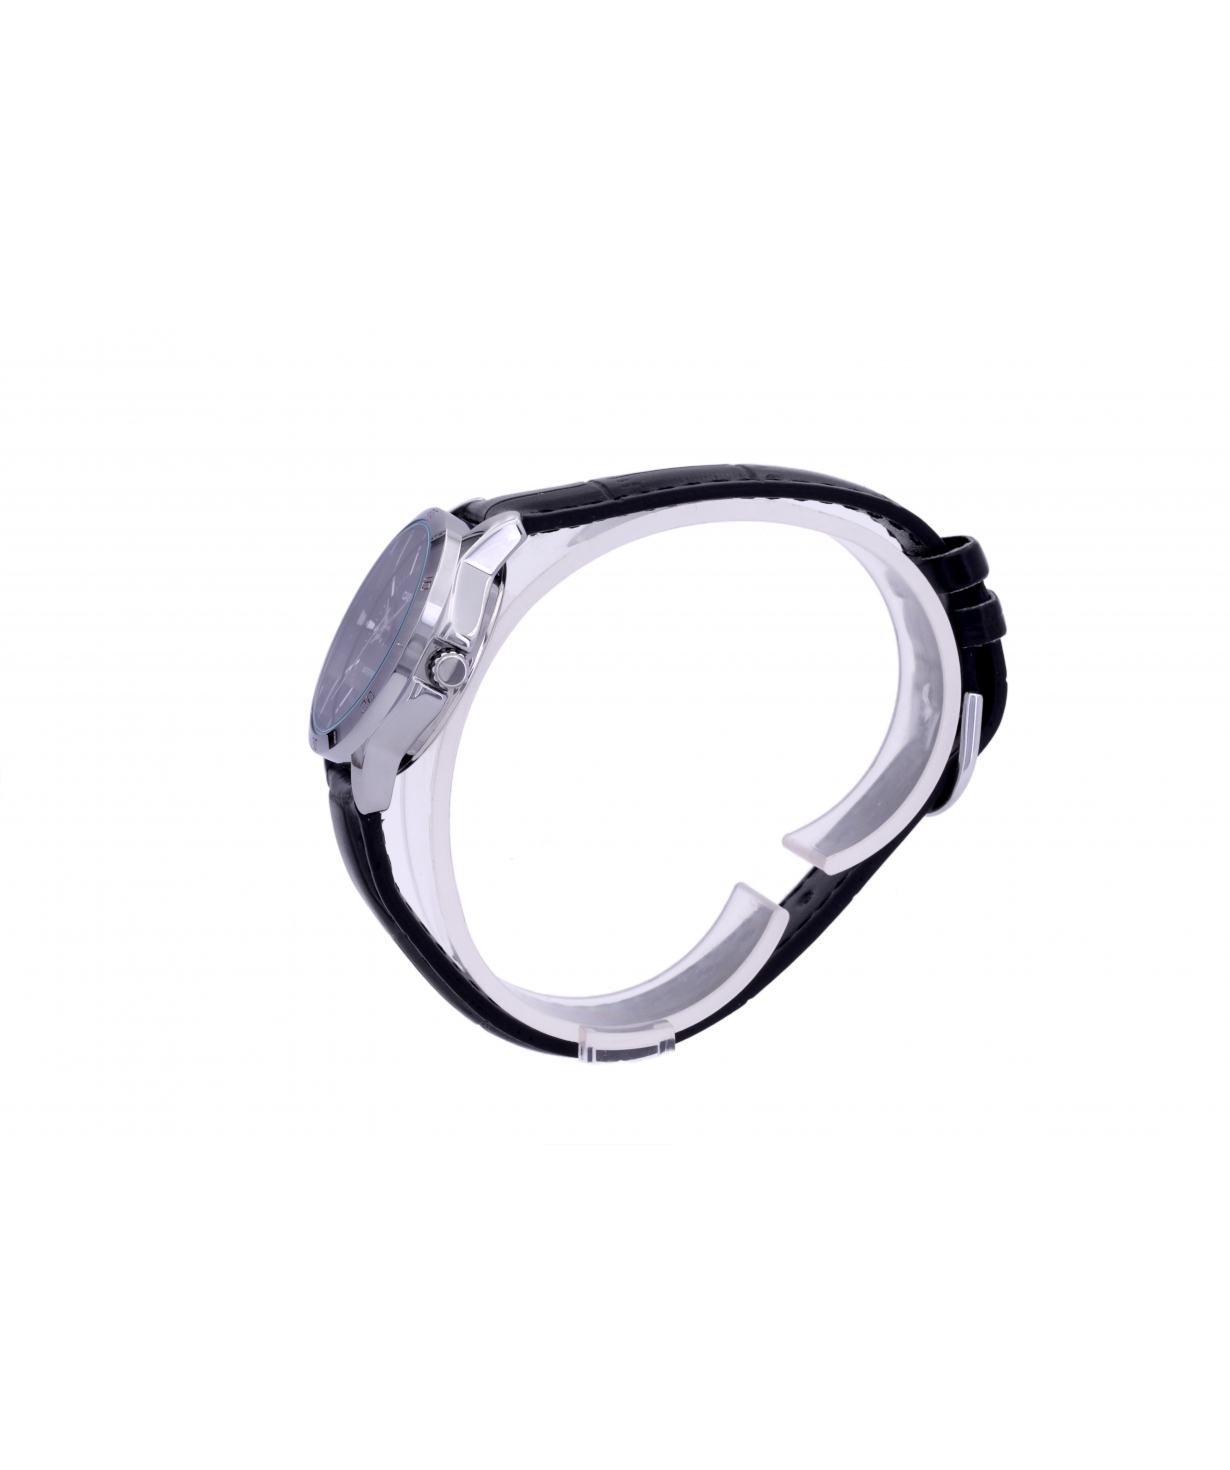 Wristwatch `Casio` LTP-V004L-1AUDF